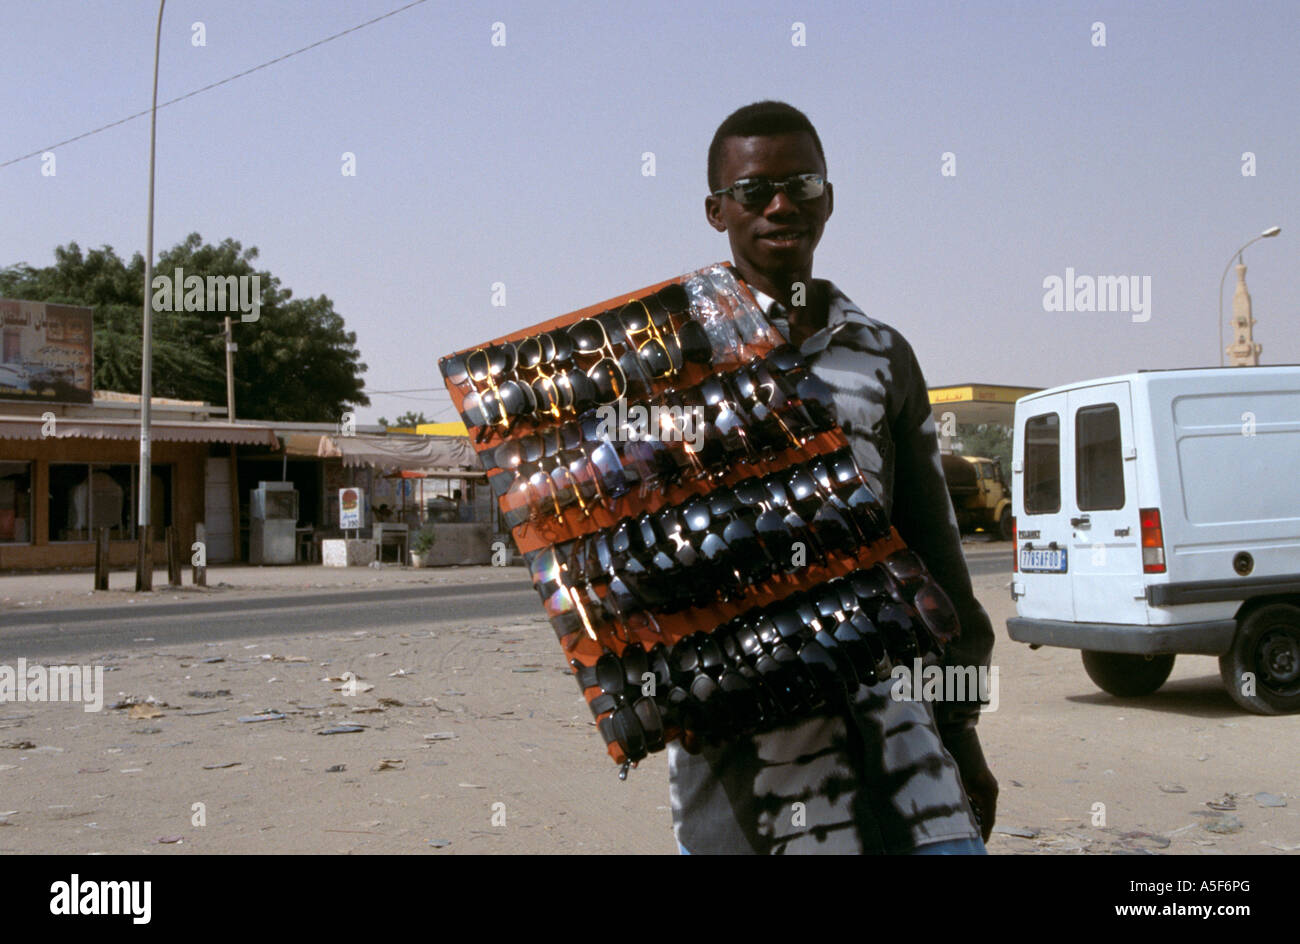 A vendor selling sunglasses in Nouakchott Mauritania Stock Photo